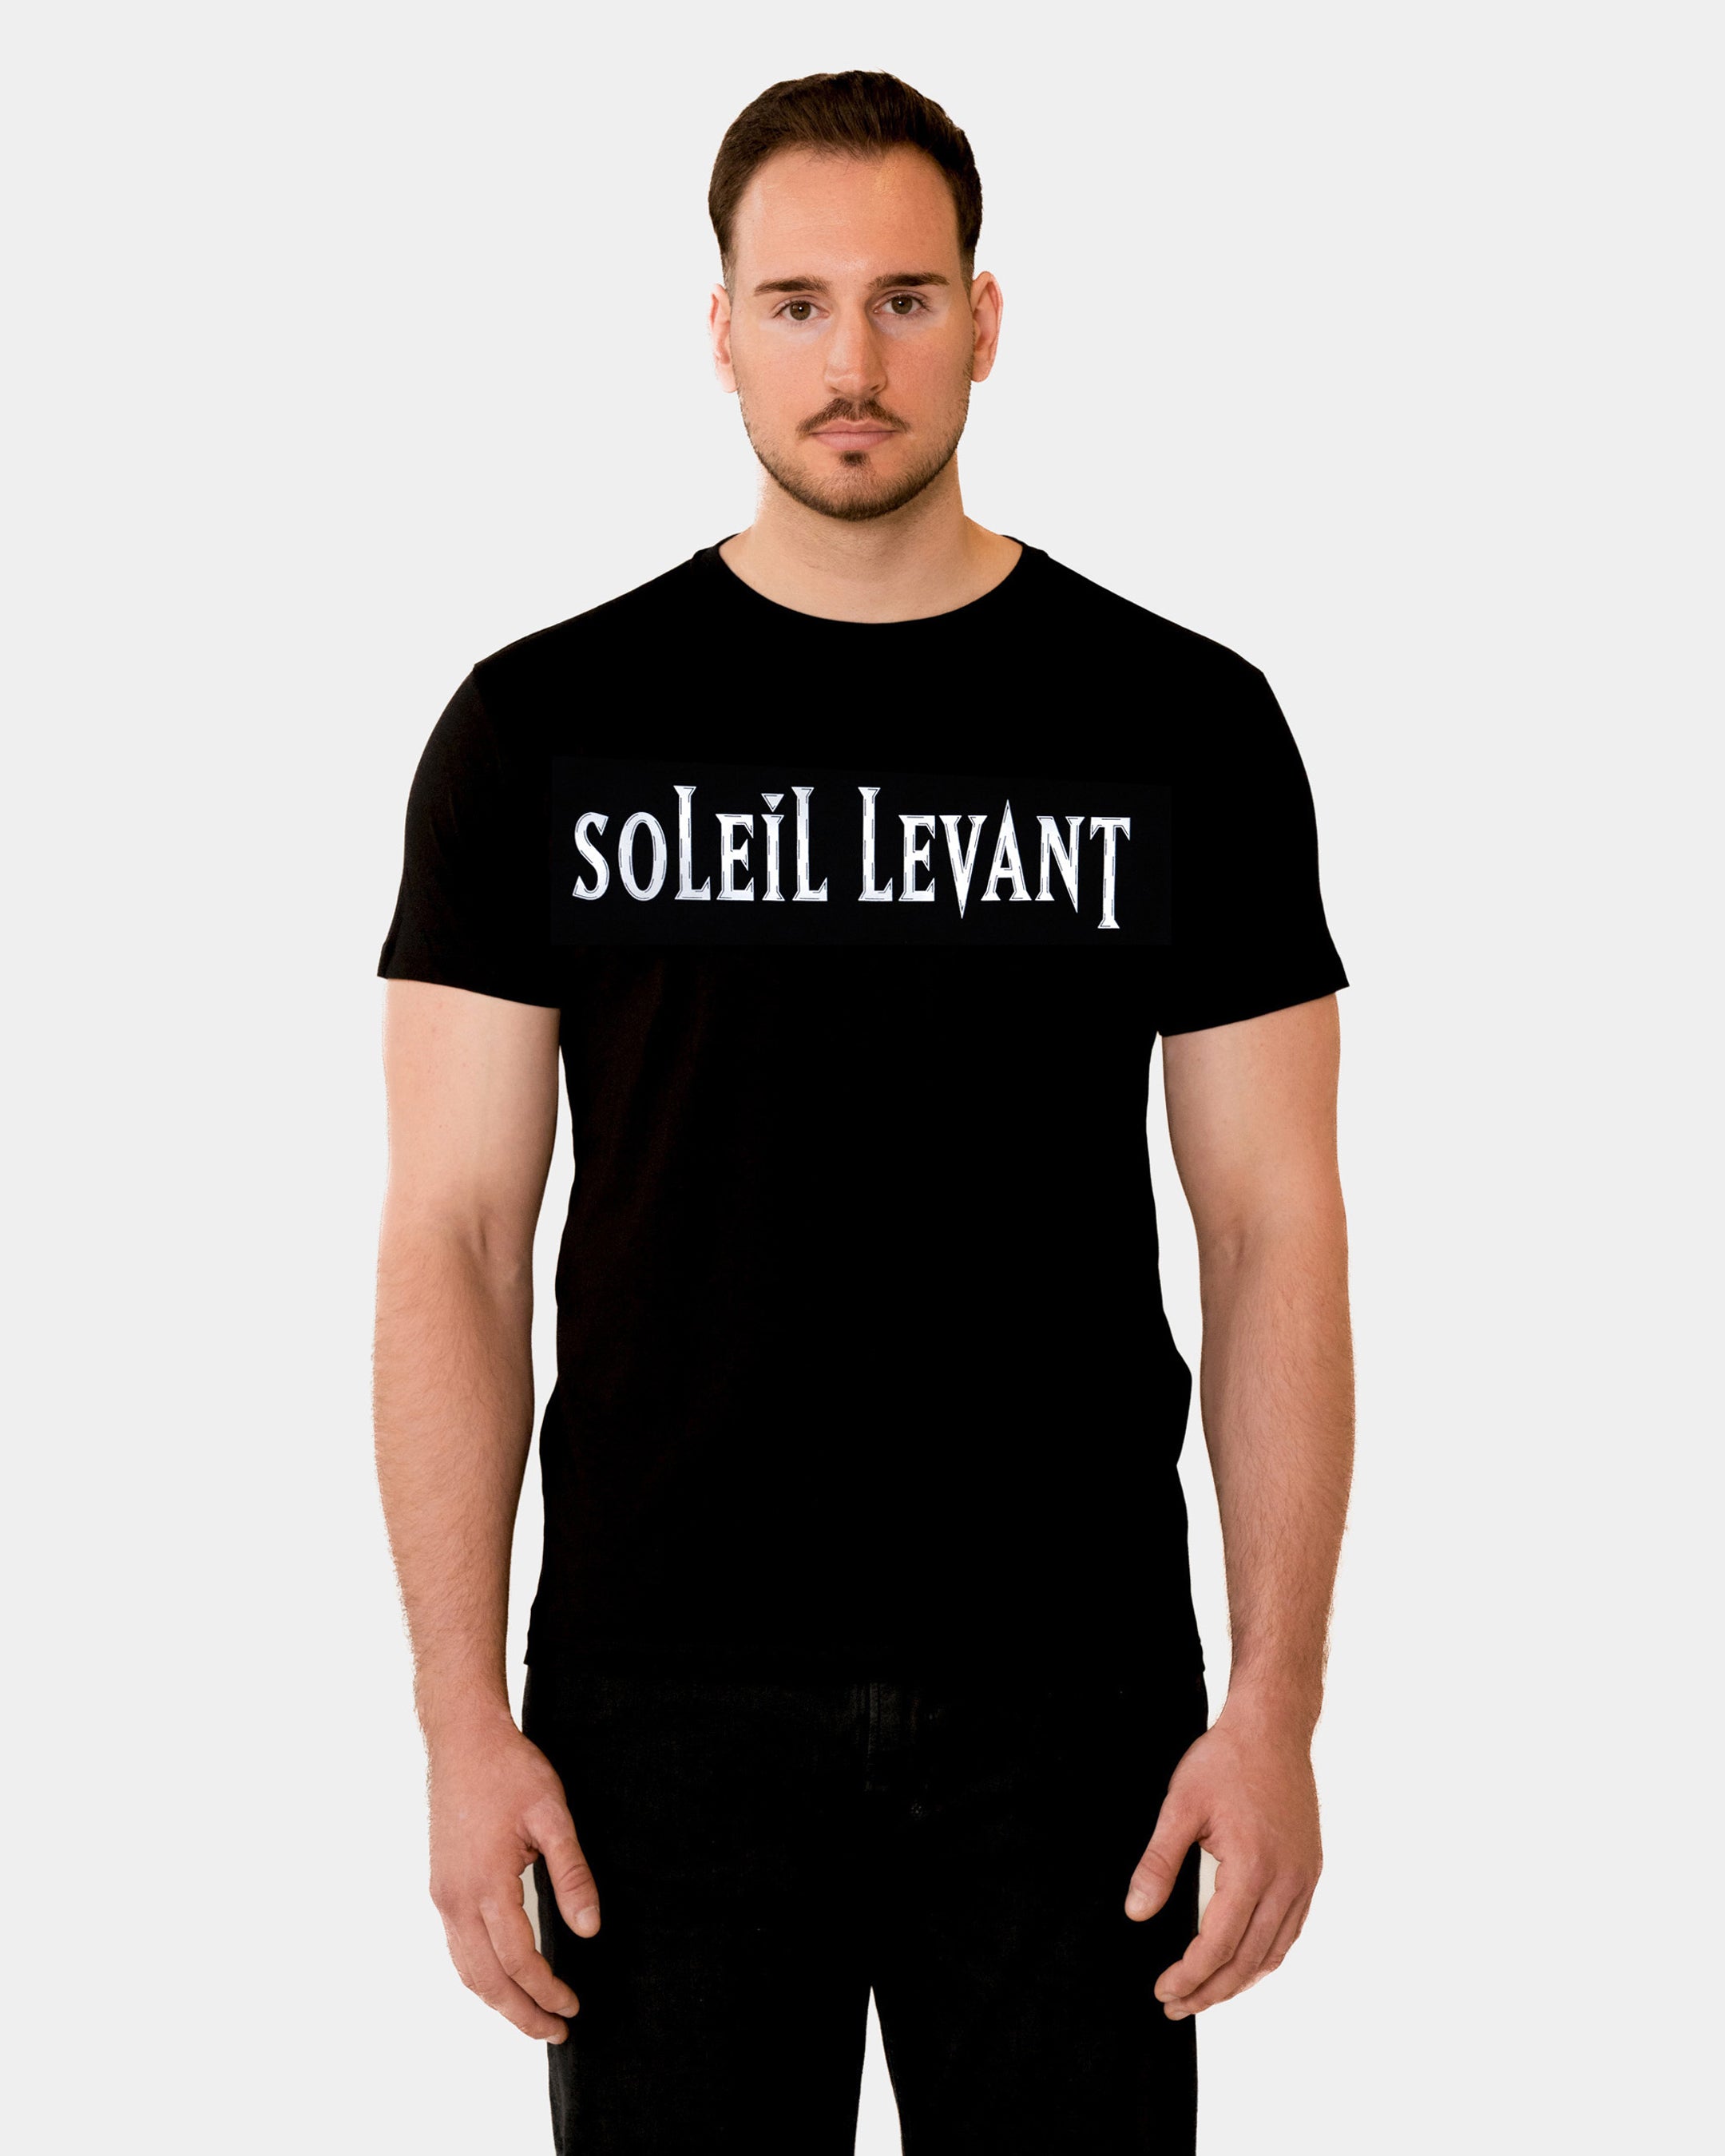 SOLEIL LEVANT | T-SHIRT | MODELL KLASSIK